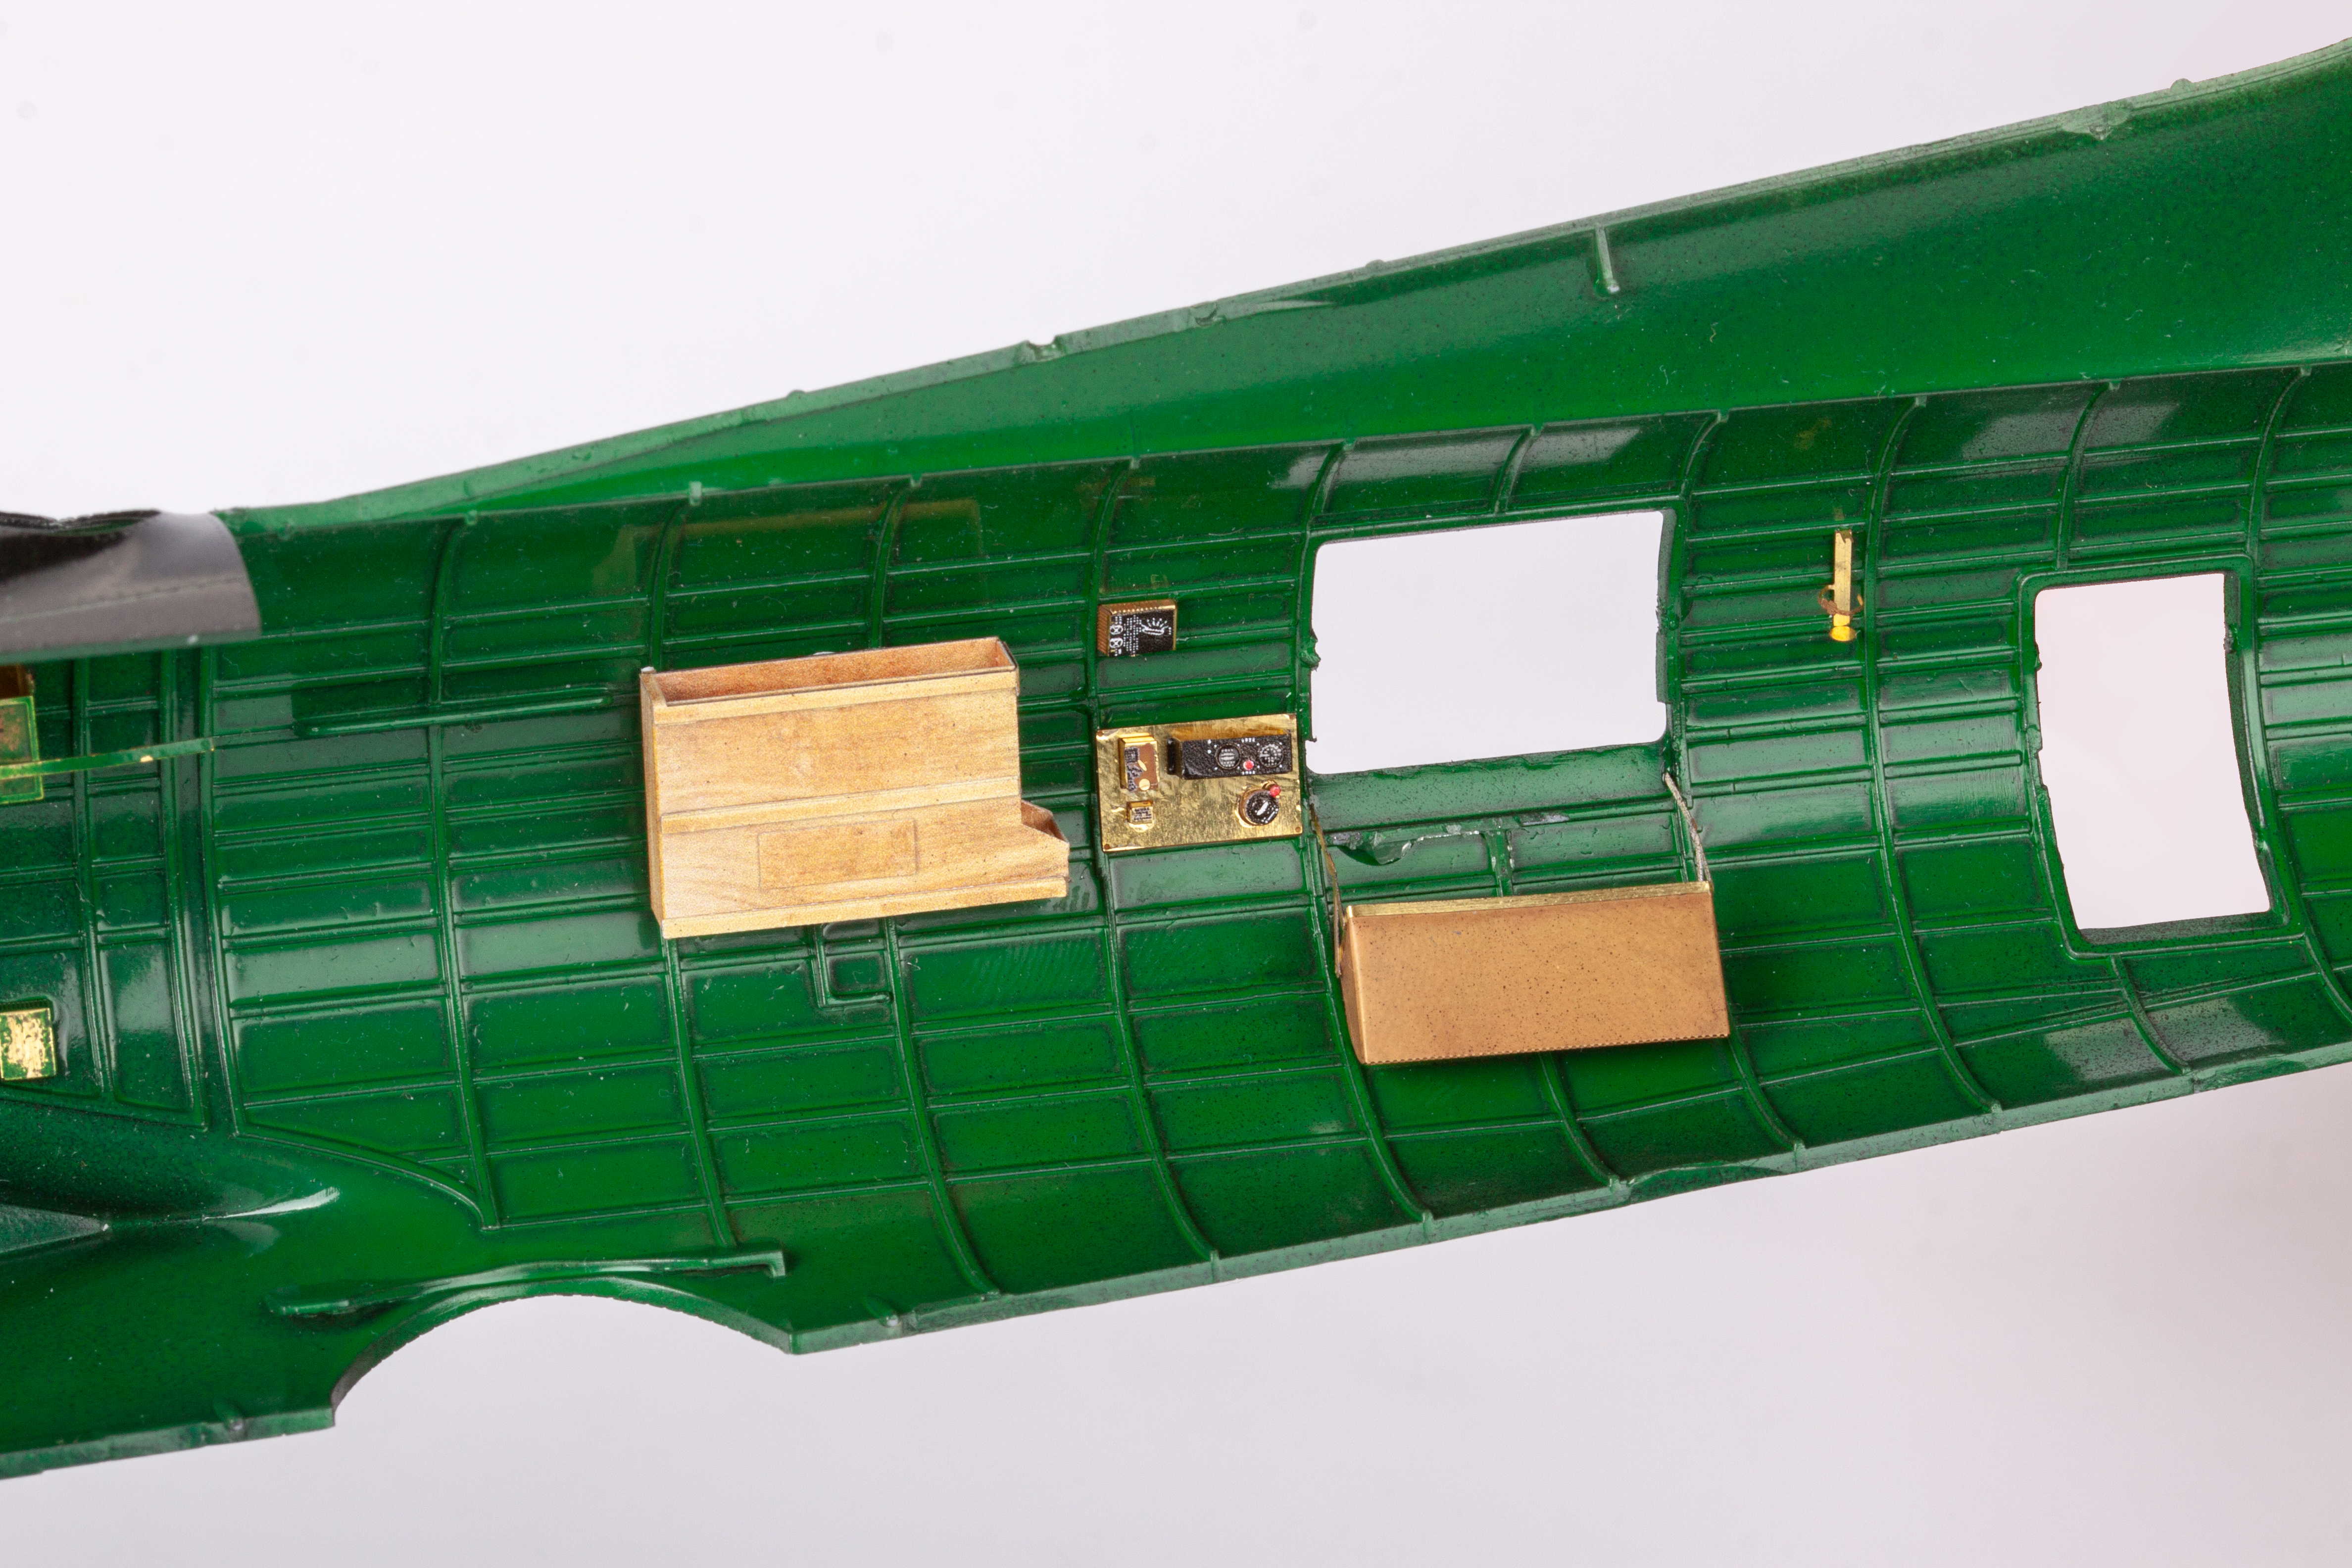 Neu Eduard Accessories BIG49256-1:48 B-17G PART III for HK Models 